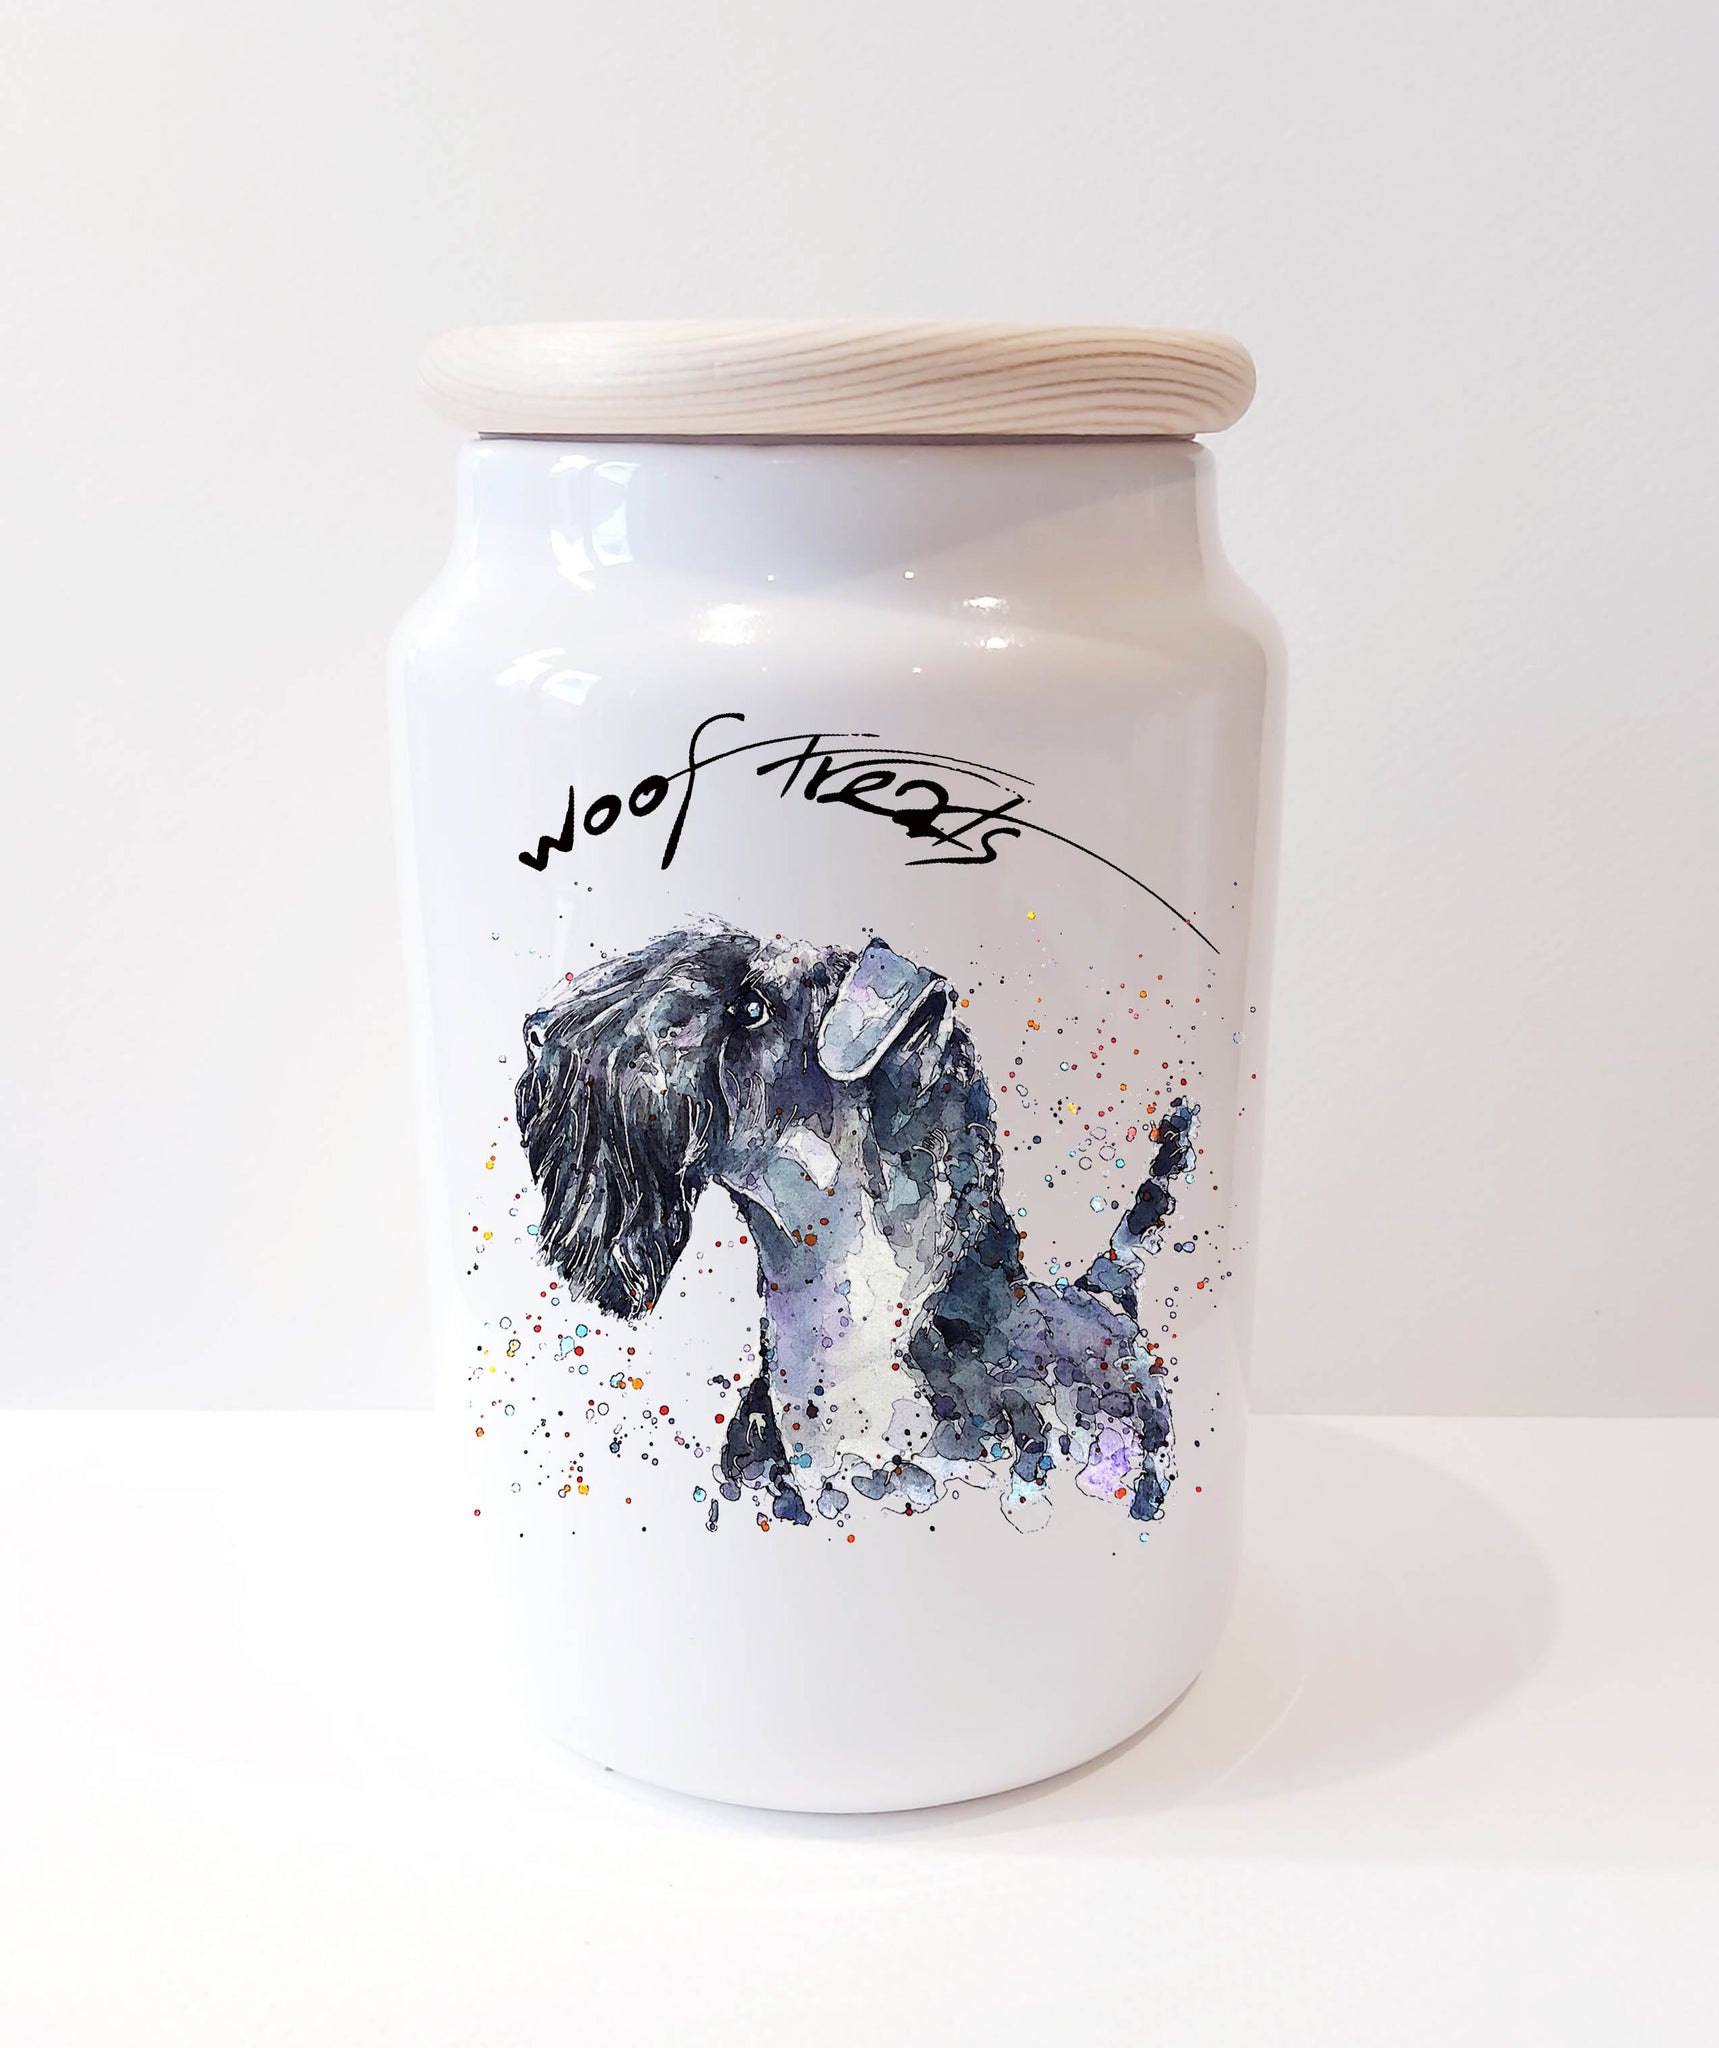 Kerry Blue Terrier II Ceramic Treats Jar.Kerry Blue Terrier Canister,KBT jar,KBT Doggie treats container.